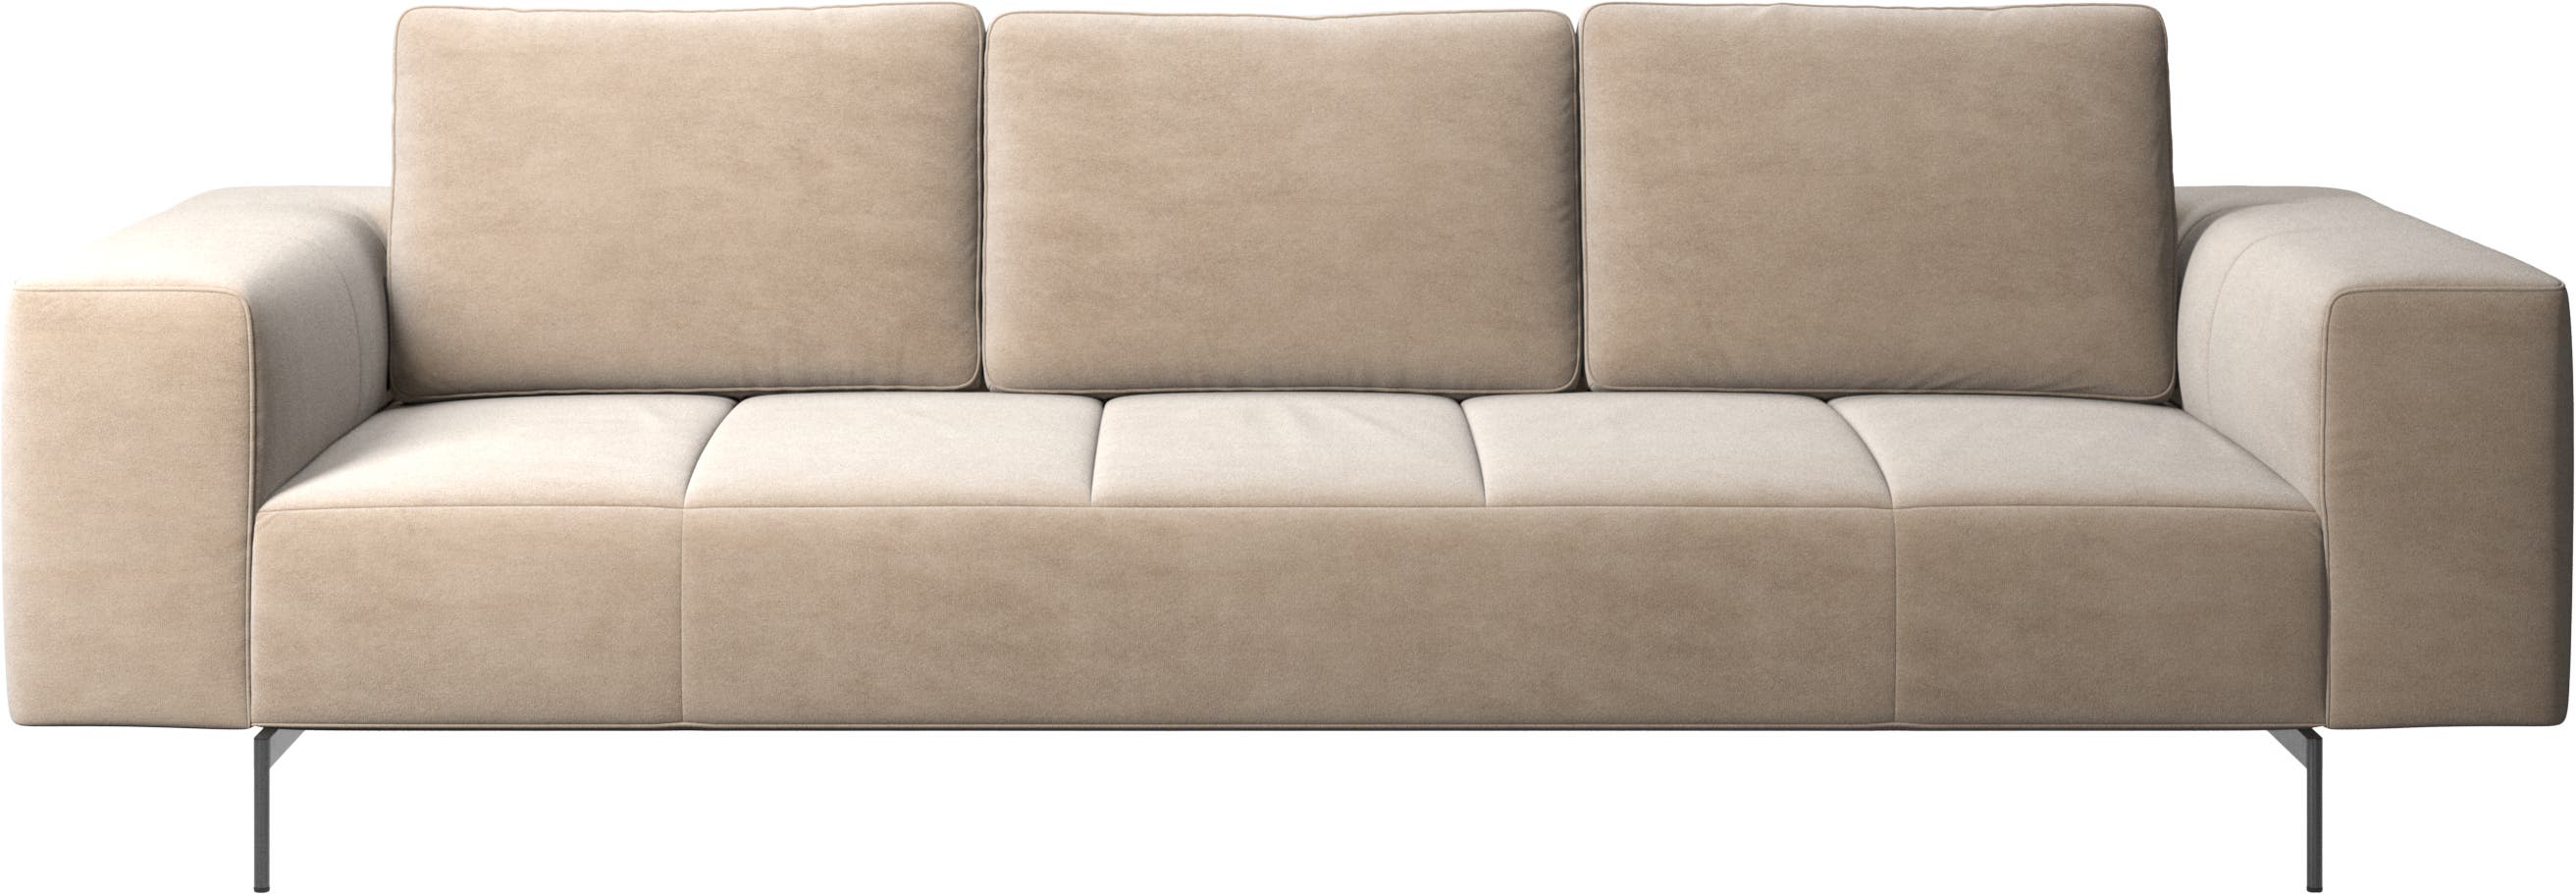 Amsterdam sofa